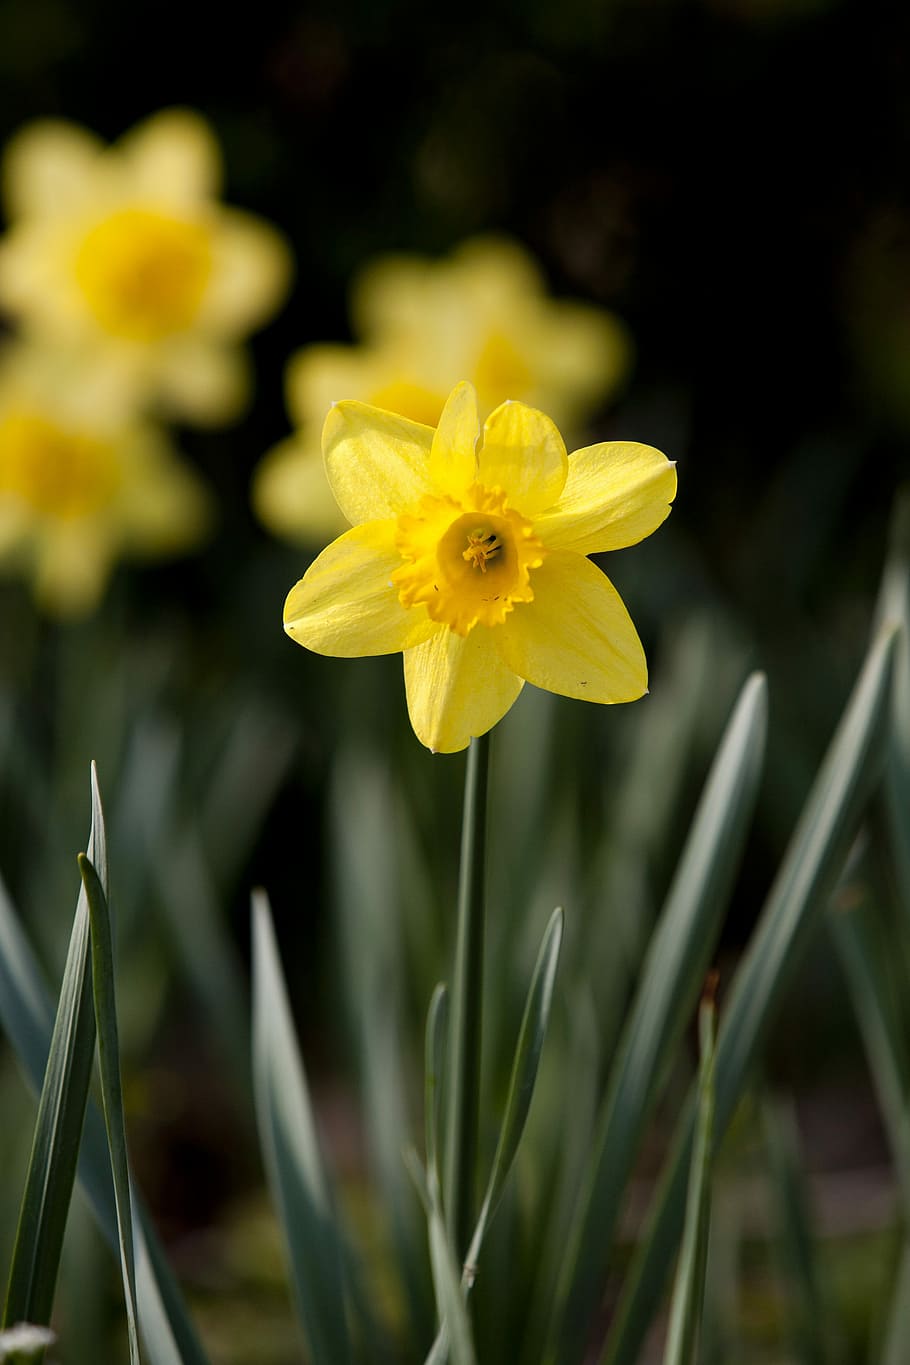 Bunga Musim Semi, Alam, Tanaman, bunga, musim semi, indah, tidak fokus, bunga kecil, april, bunga kuning